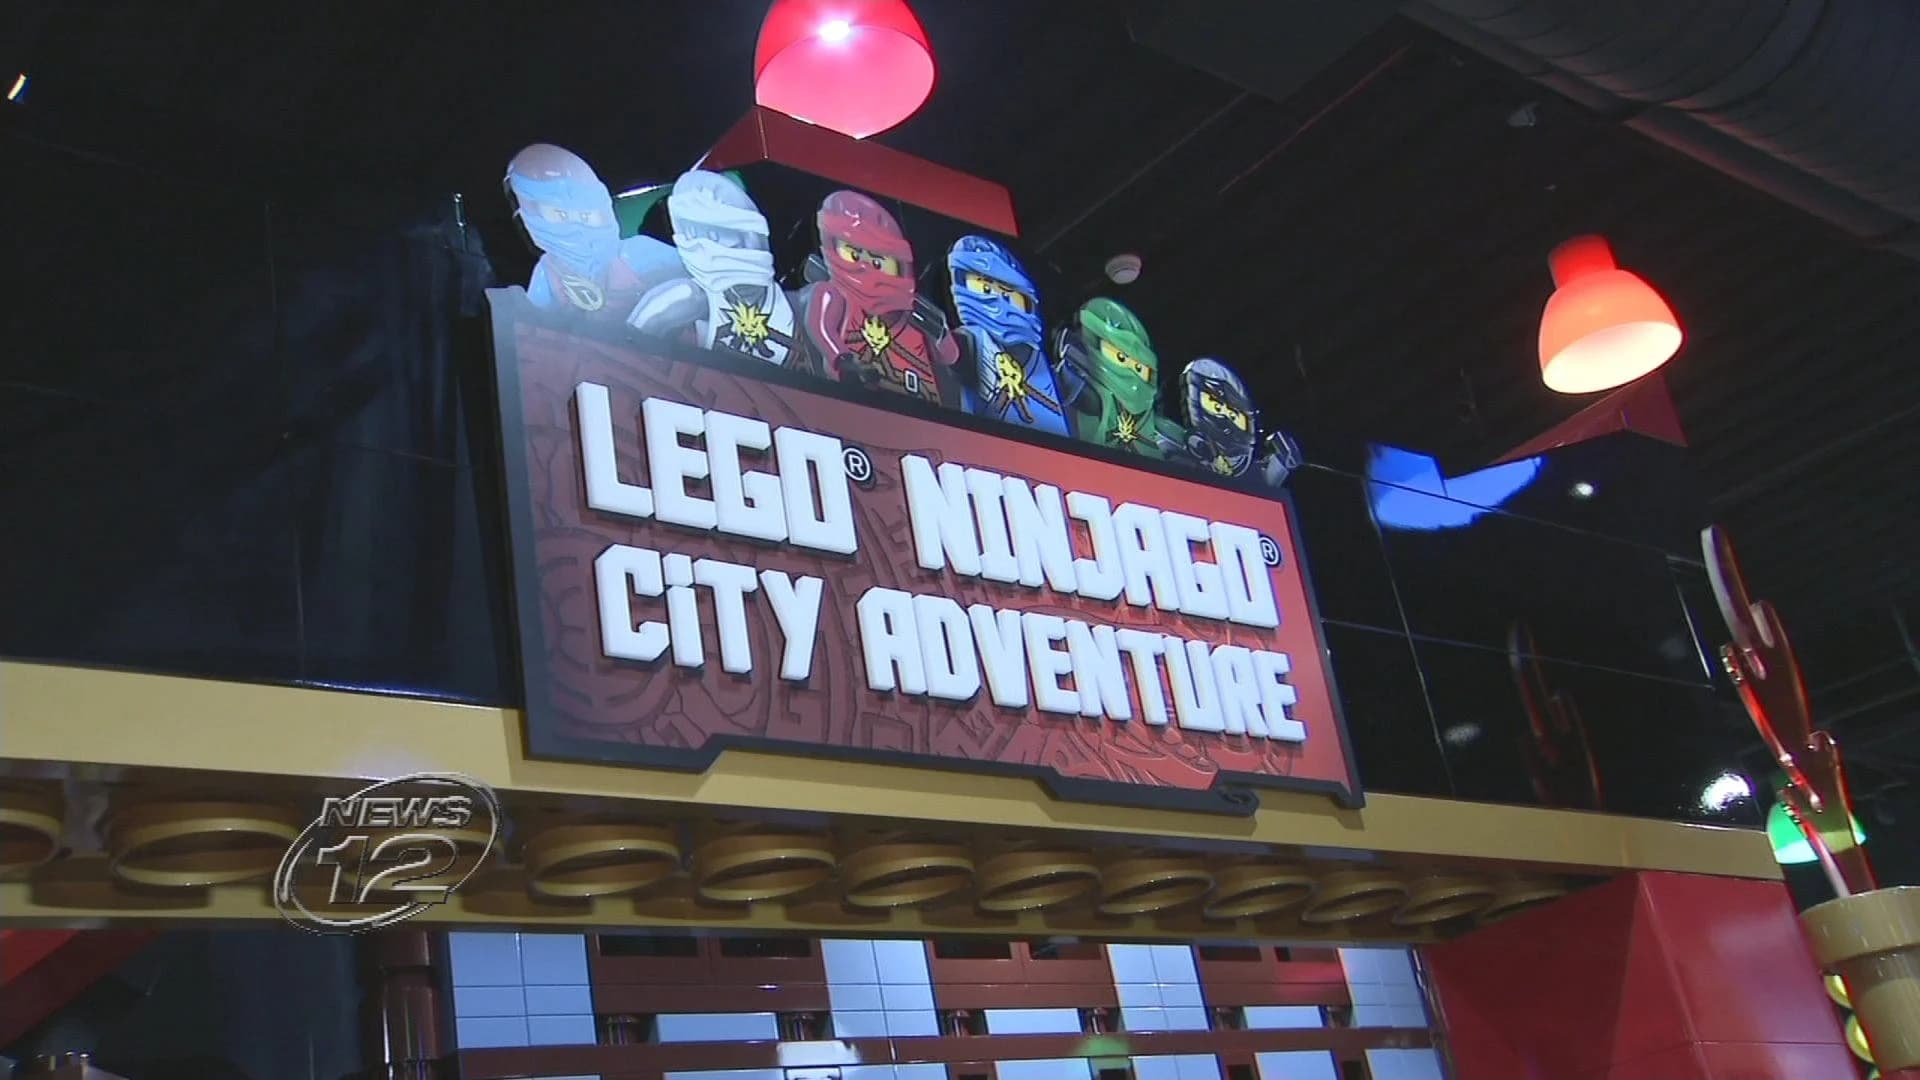 Kids can go ninja at Legoland Ninjago City